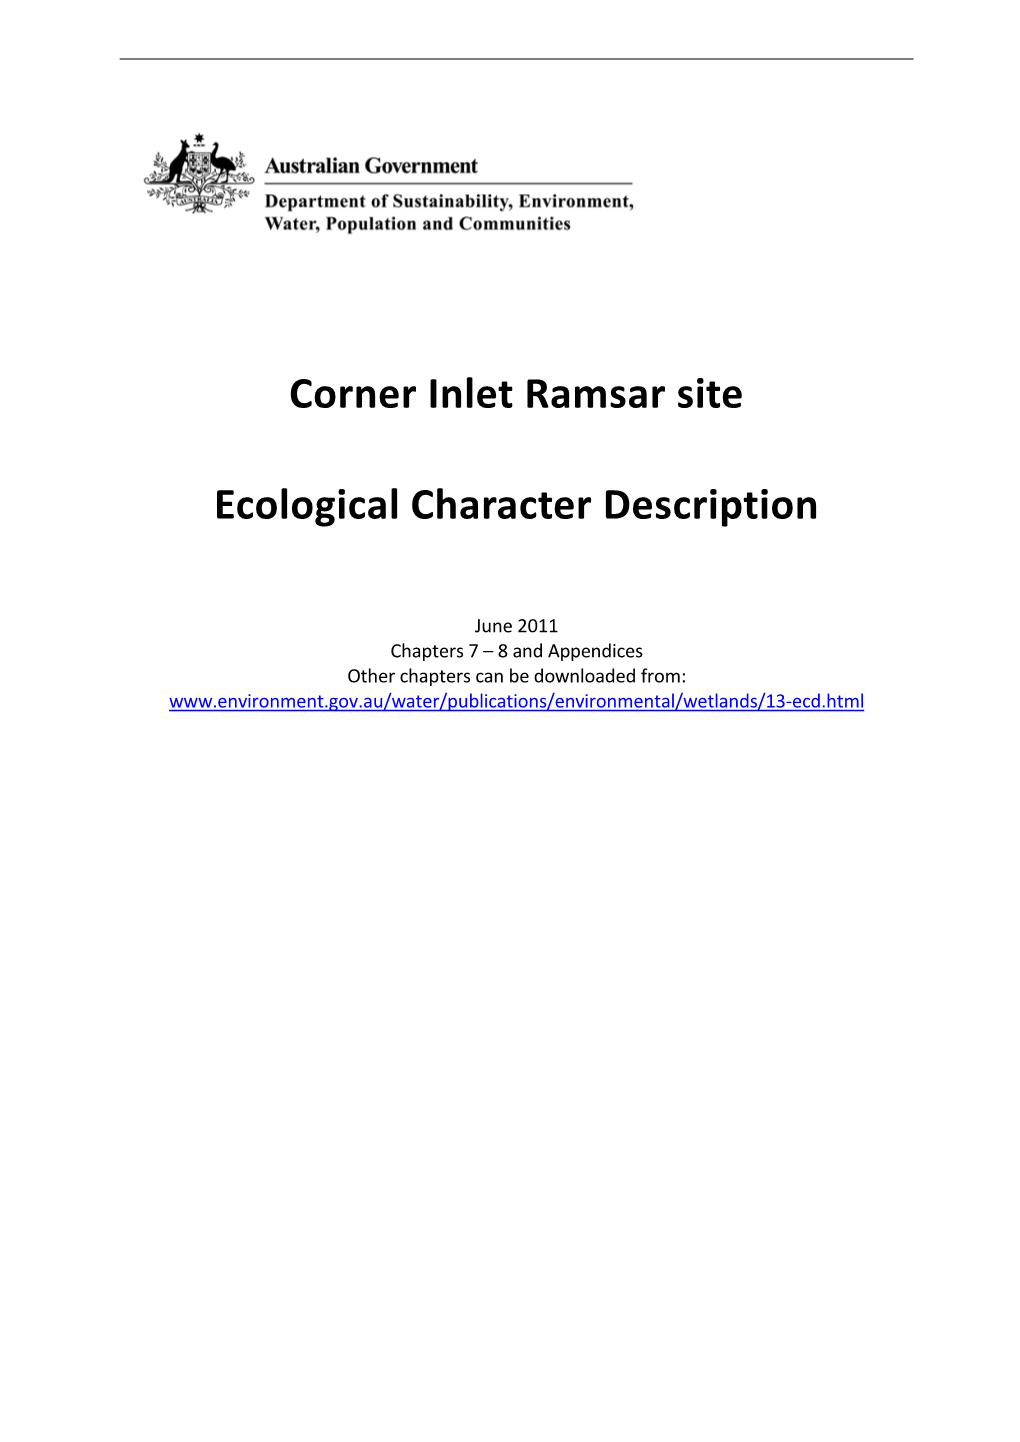 Corner Inlet Ramsar Site Ecological Character Description